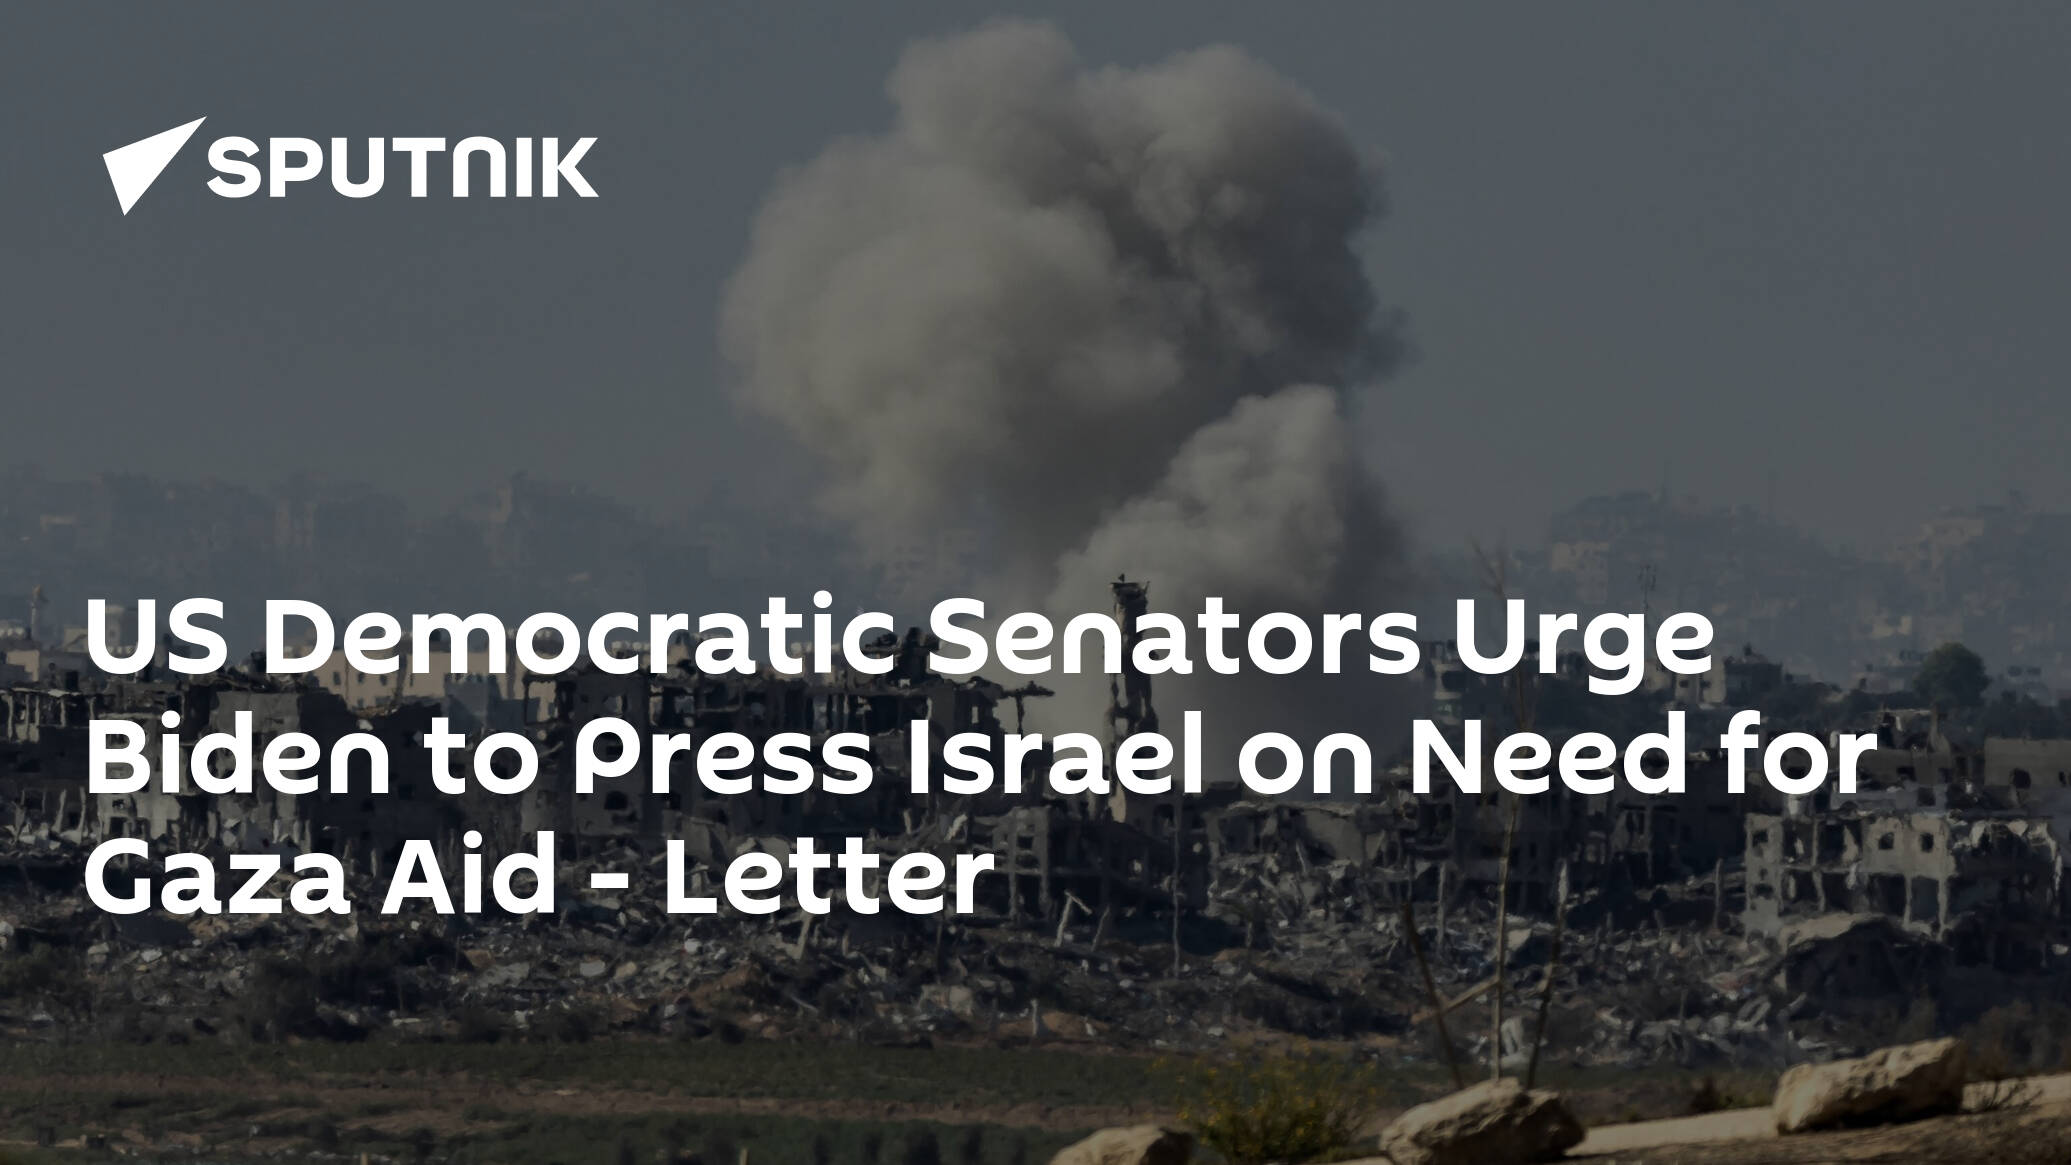 US Democratic Senators Urge Biden to Press Israel on Need for Gaza Aid – Letter